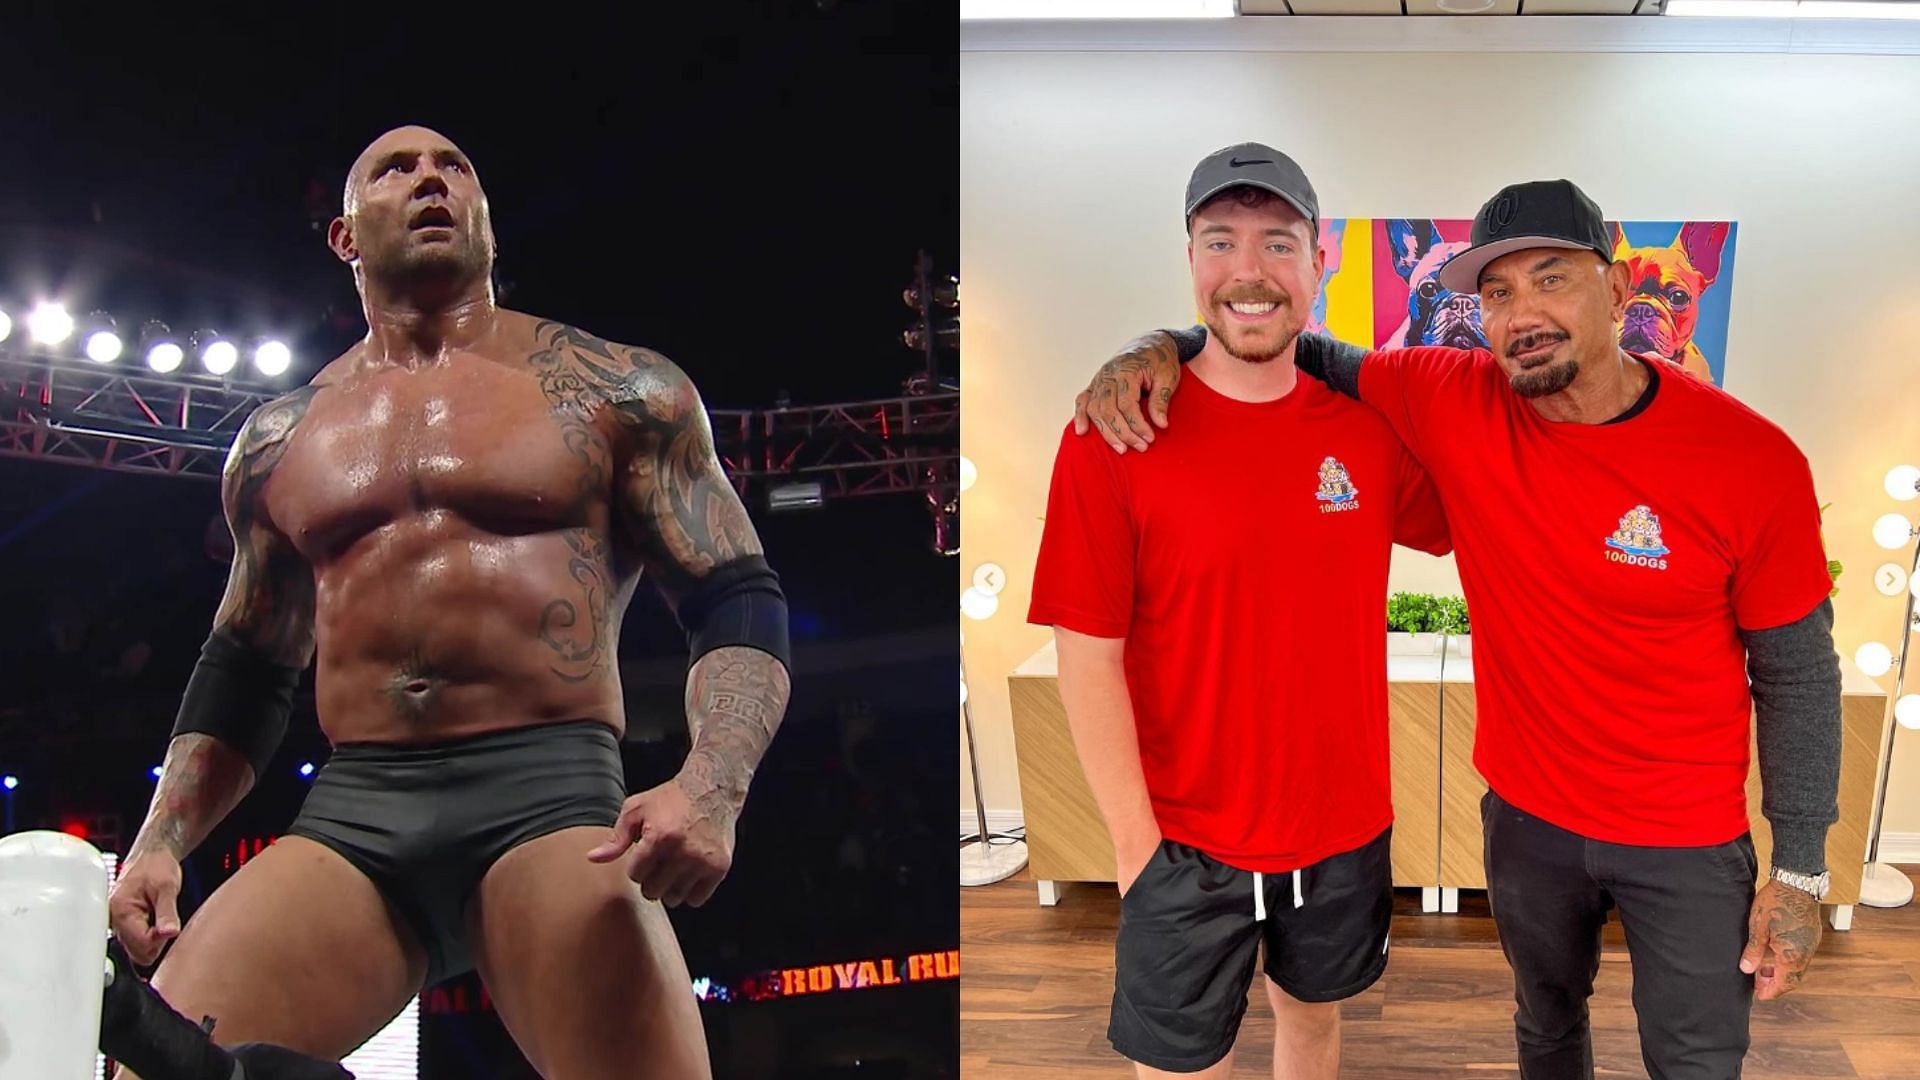 Batista was recently seen with Mr. Beast